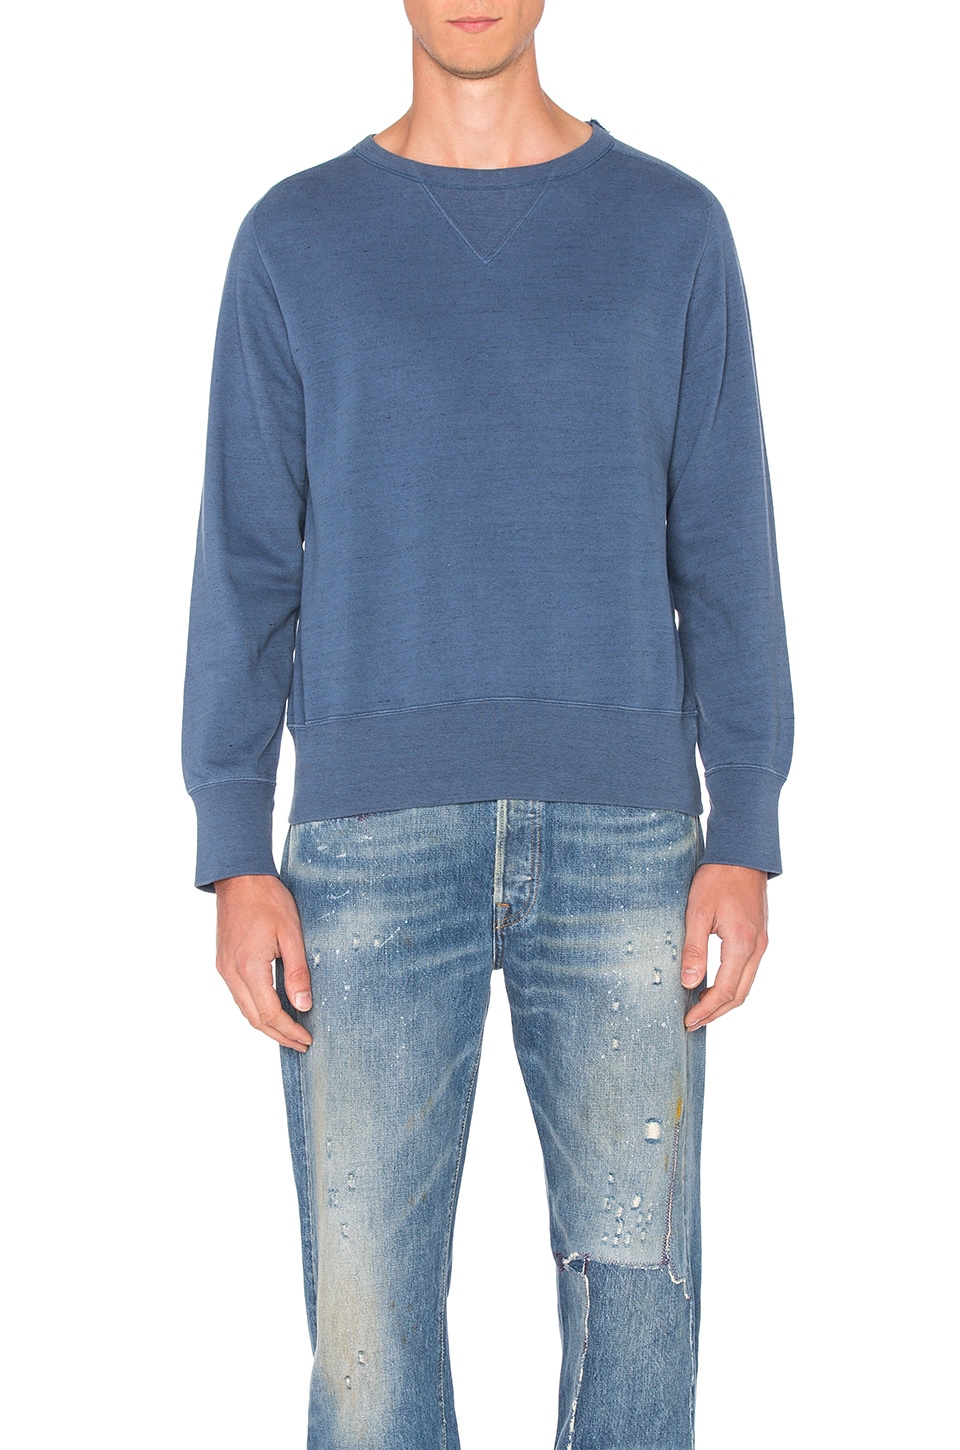 LEVI'S Vintage Clothing Bay Meadows Sweatshirt in Blue Note Mele | REVOLVE